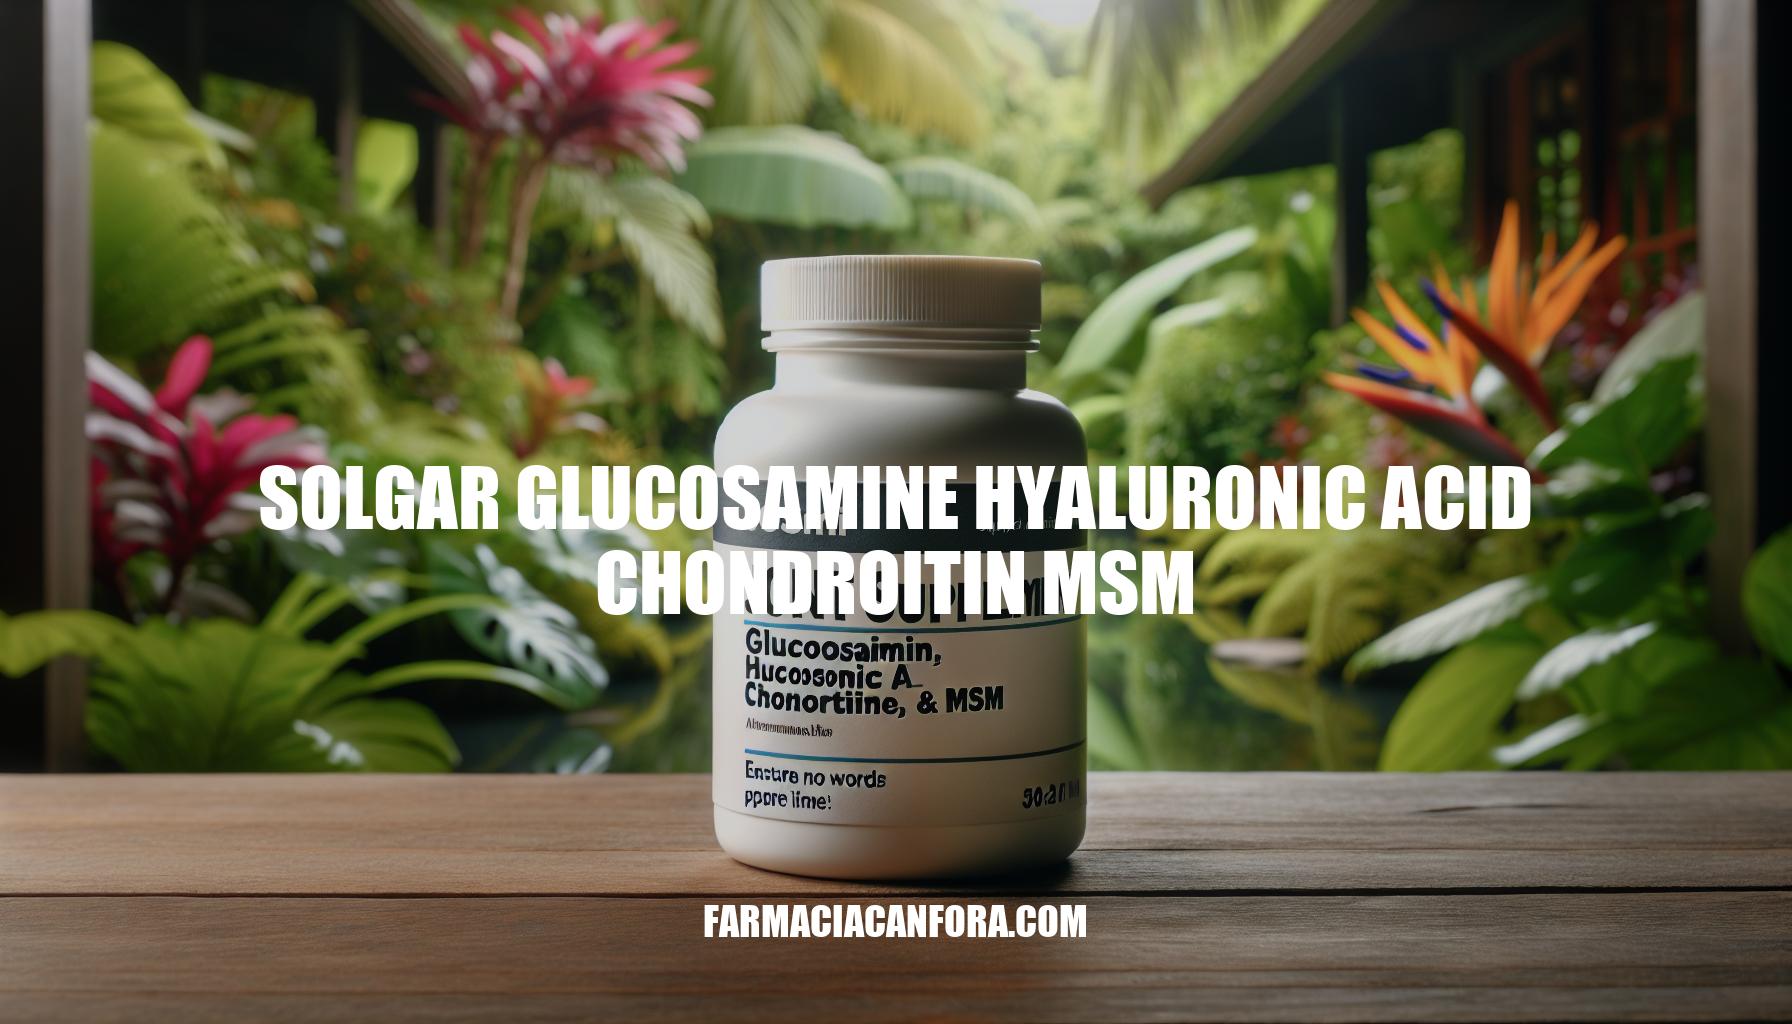 Solgar Glucosamine Hyaluronic Acid Chondroitin MSM Benefits